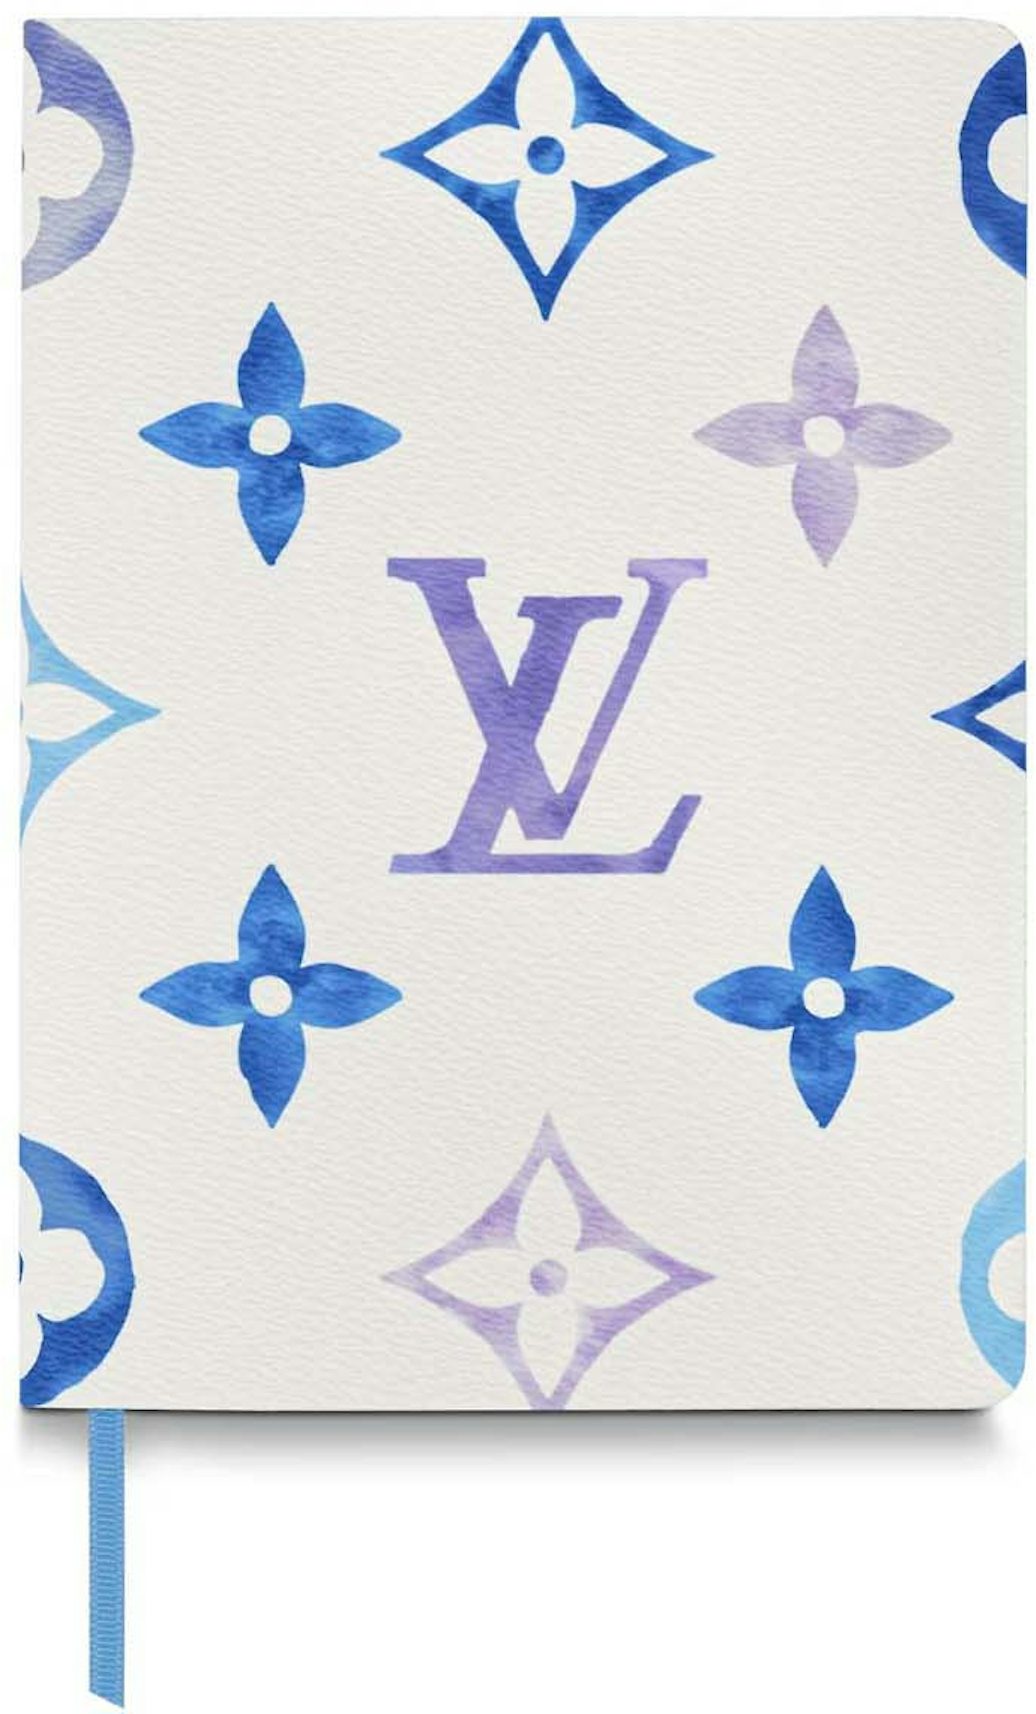 Louis Vuitton Monogram Paul Notebook Cover - Brown Books